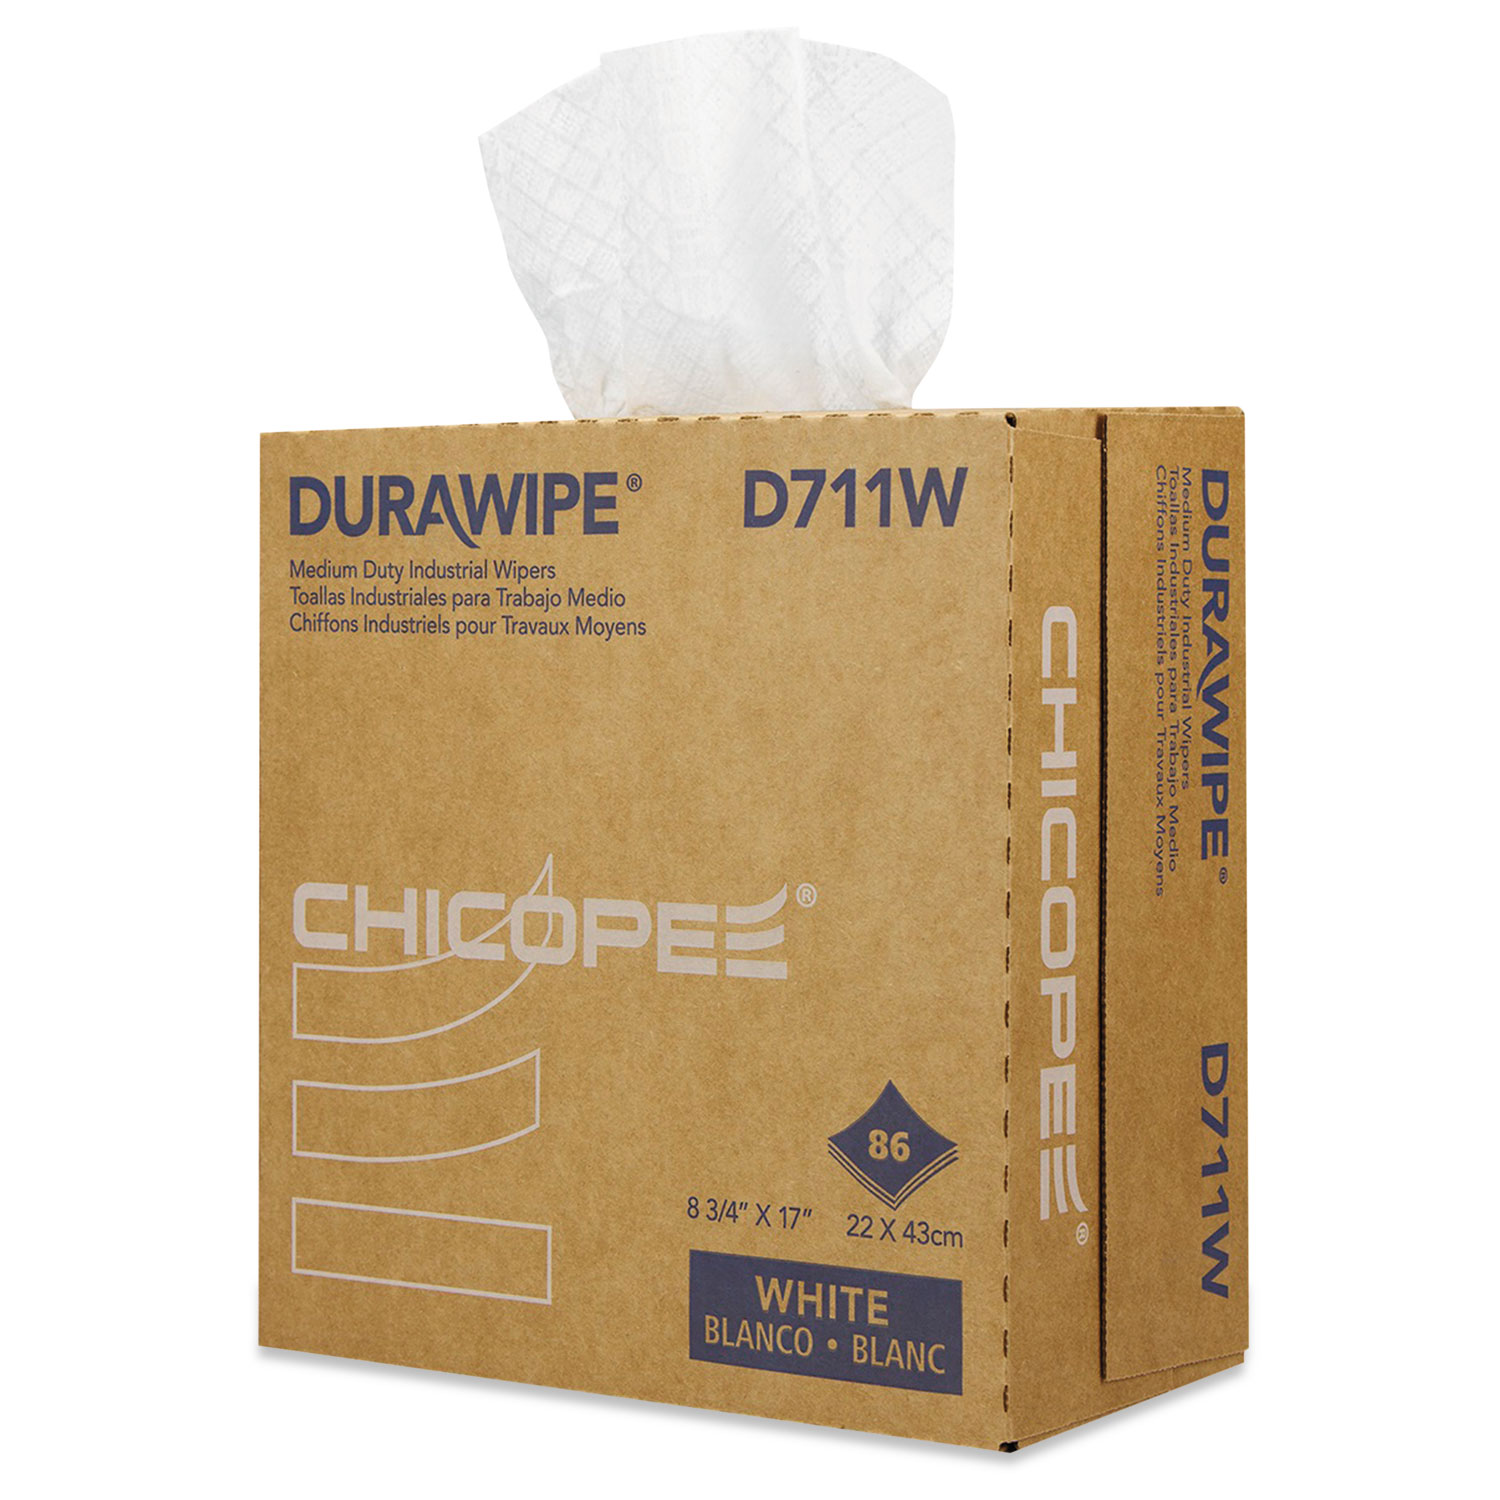 Durawipe Medium-Duty Industrial Wipers, 8.8 x 17, White, 86/Box, 12 Box/Carton